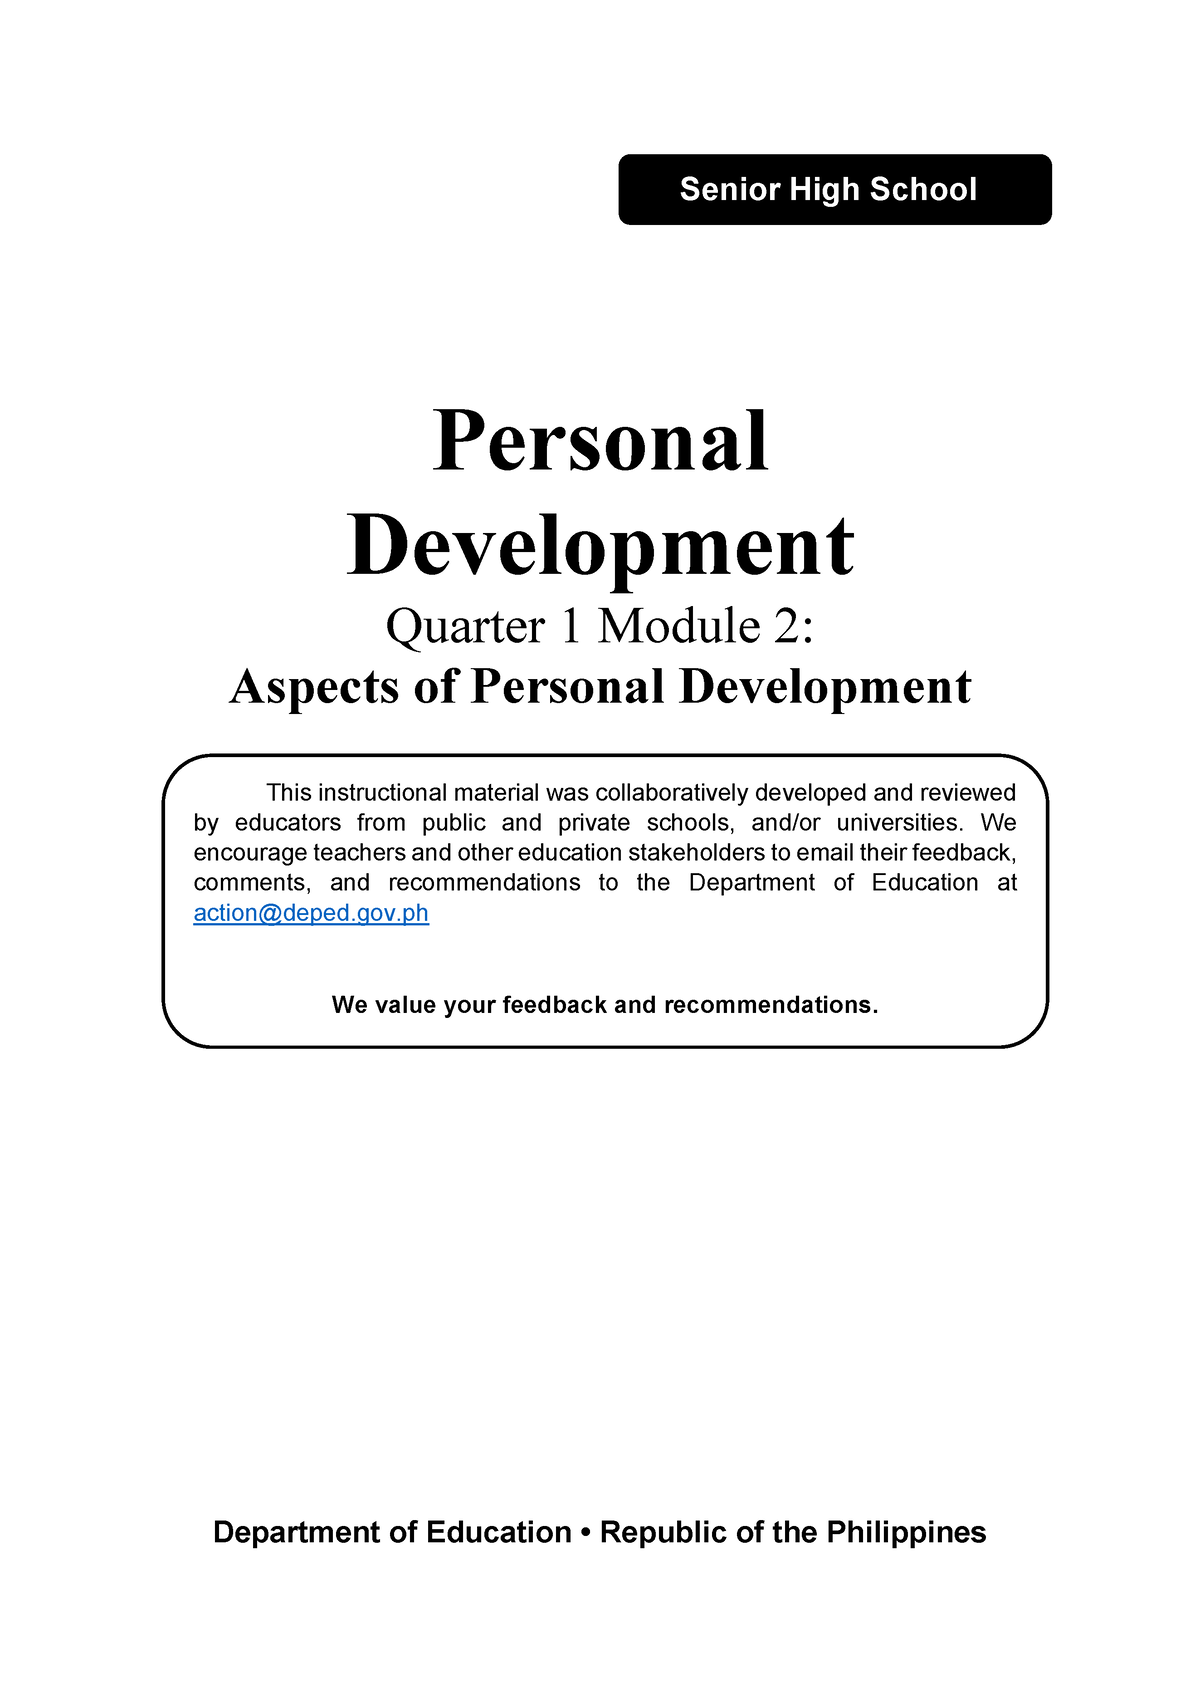 Personal Development Quarter 2 Module 3 Grade 11 Personal Development Quarter 1 Module 2 3085